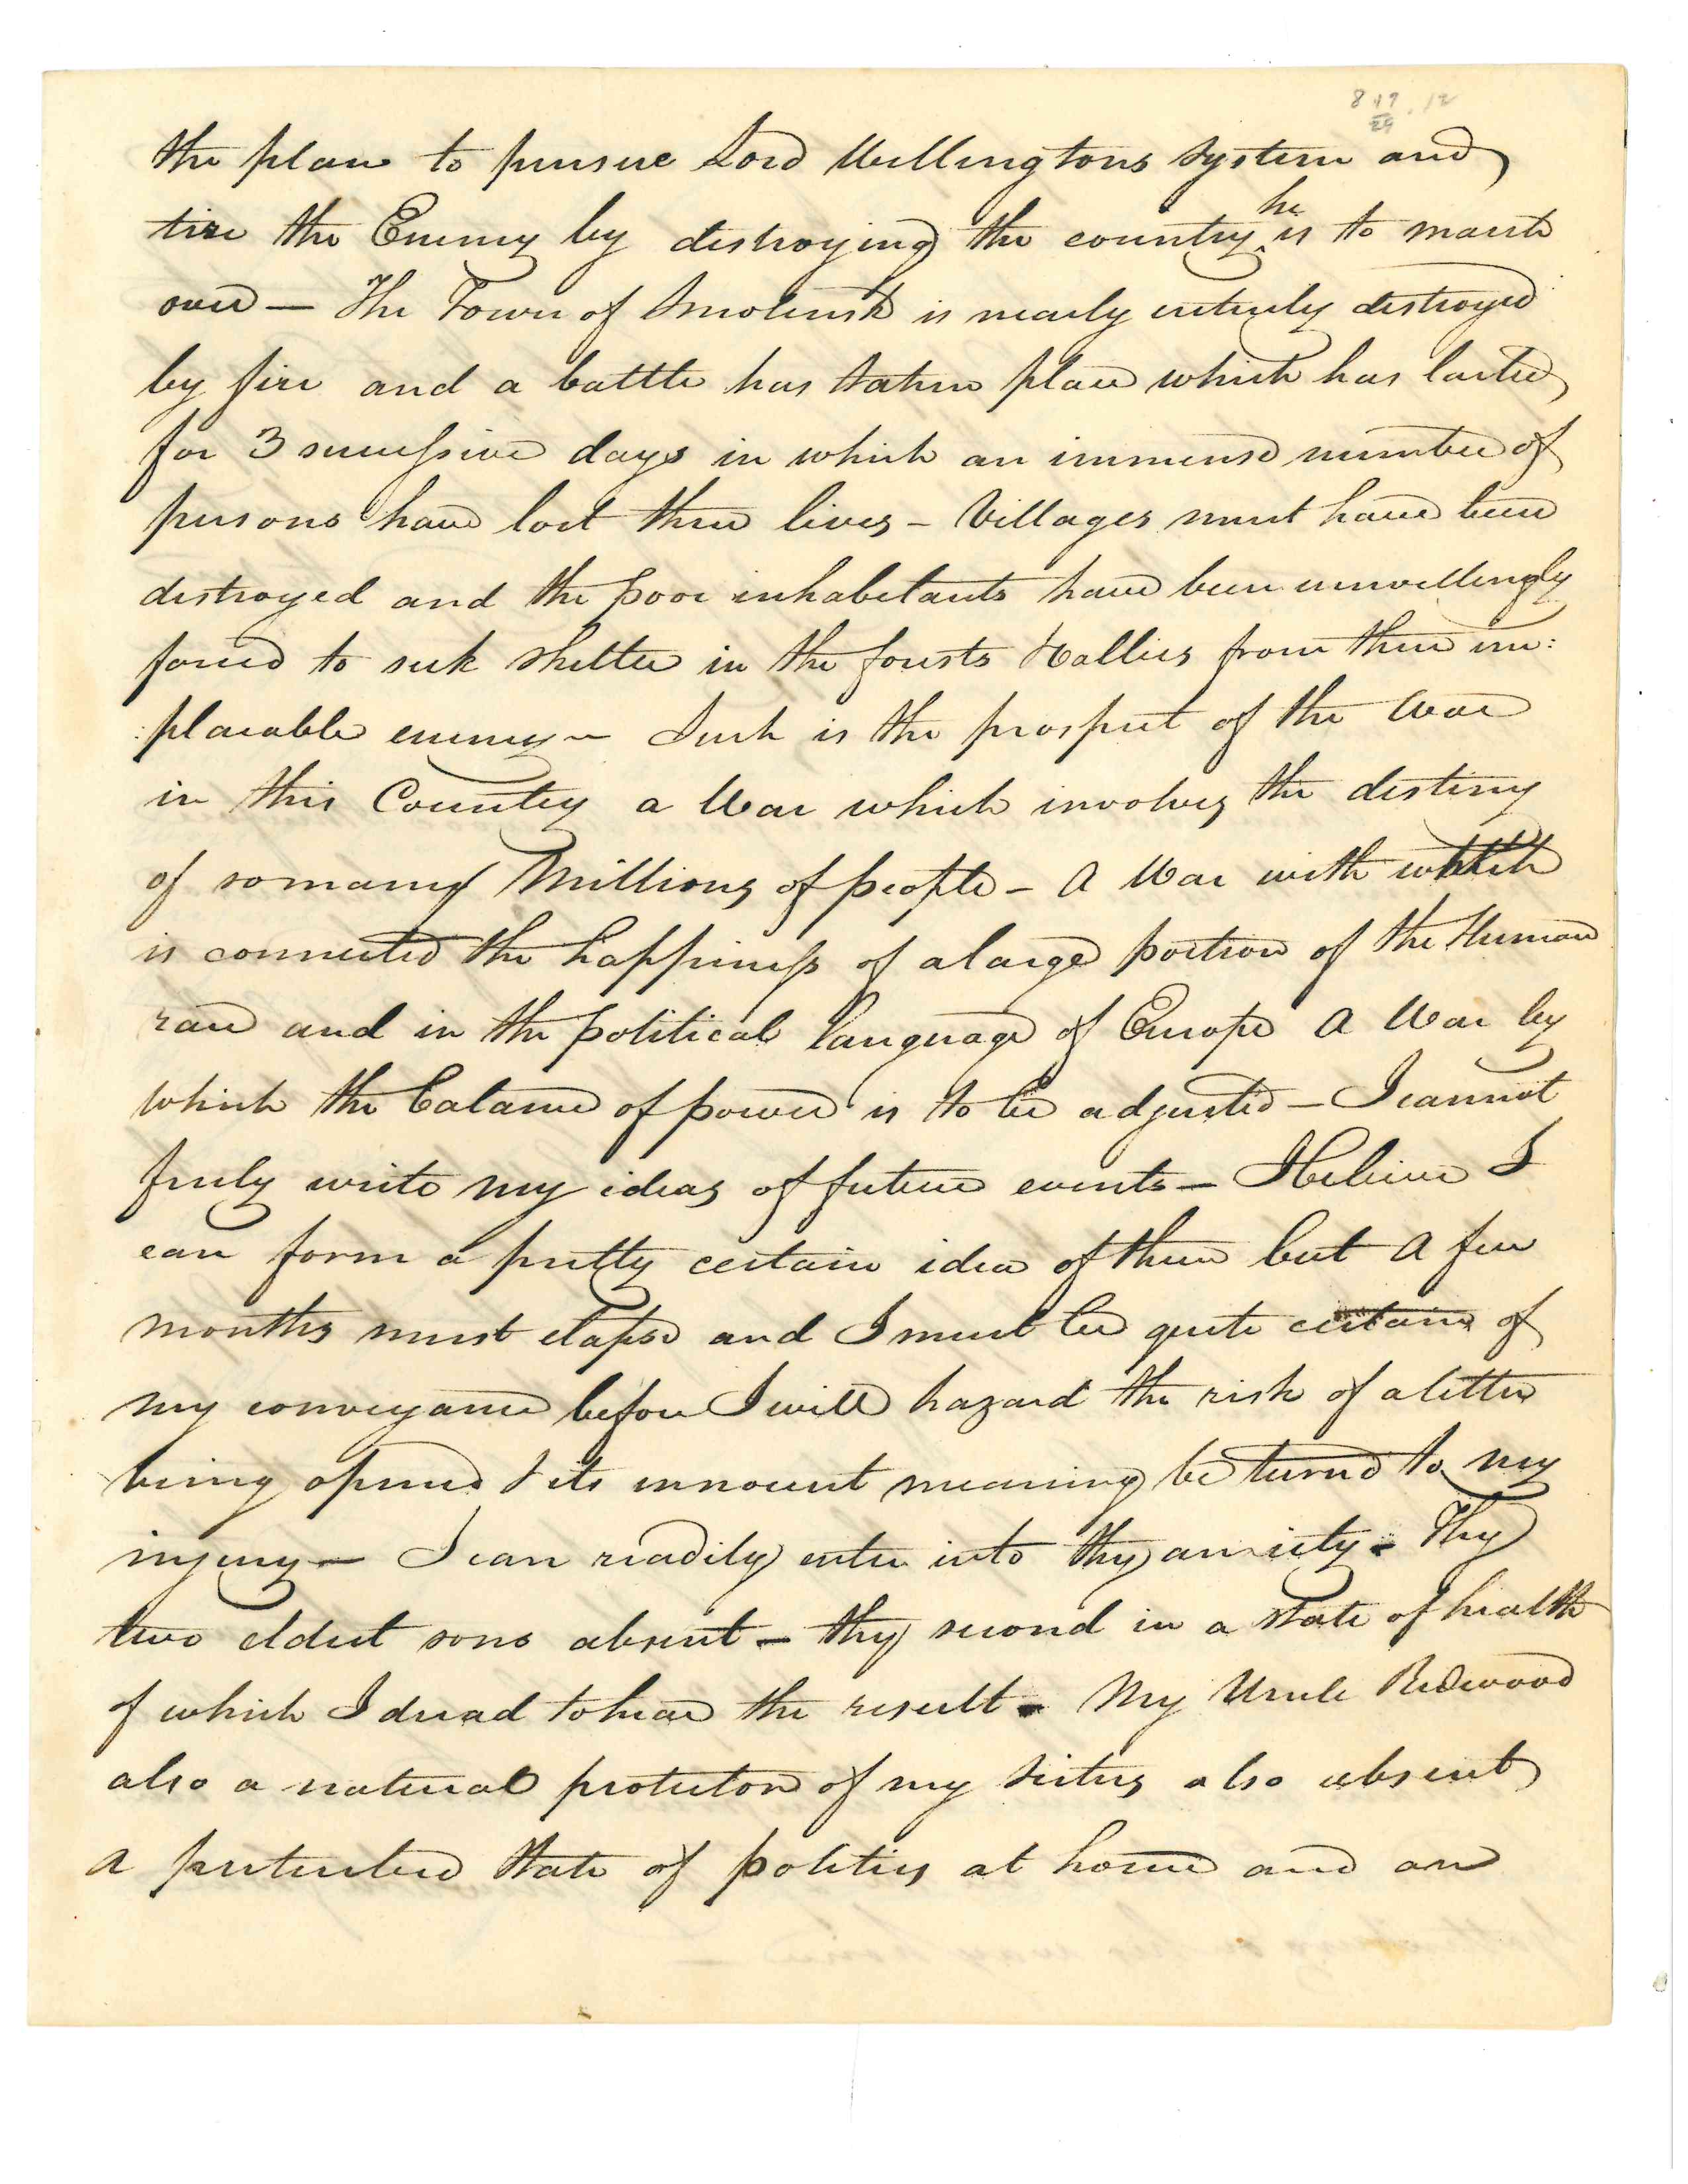 Fisher 1812 letter